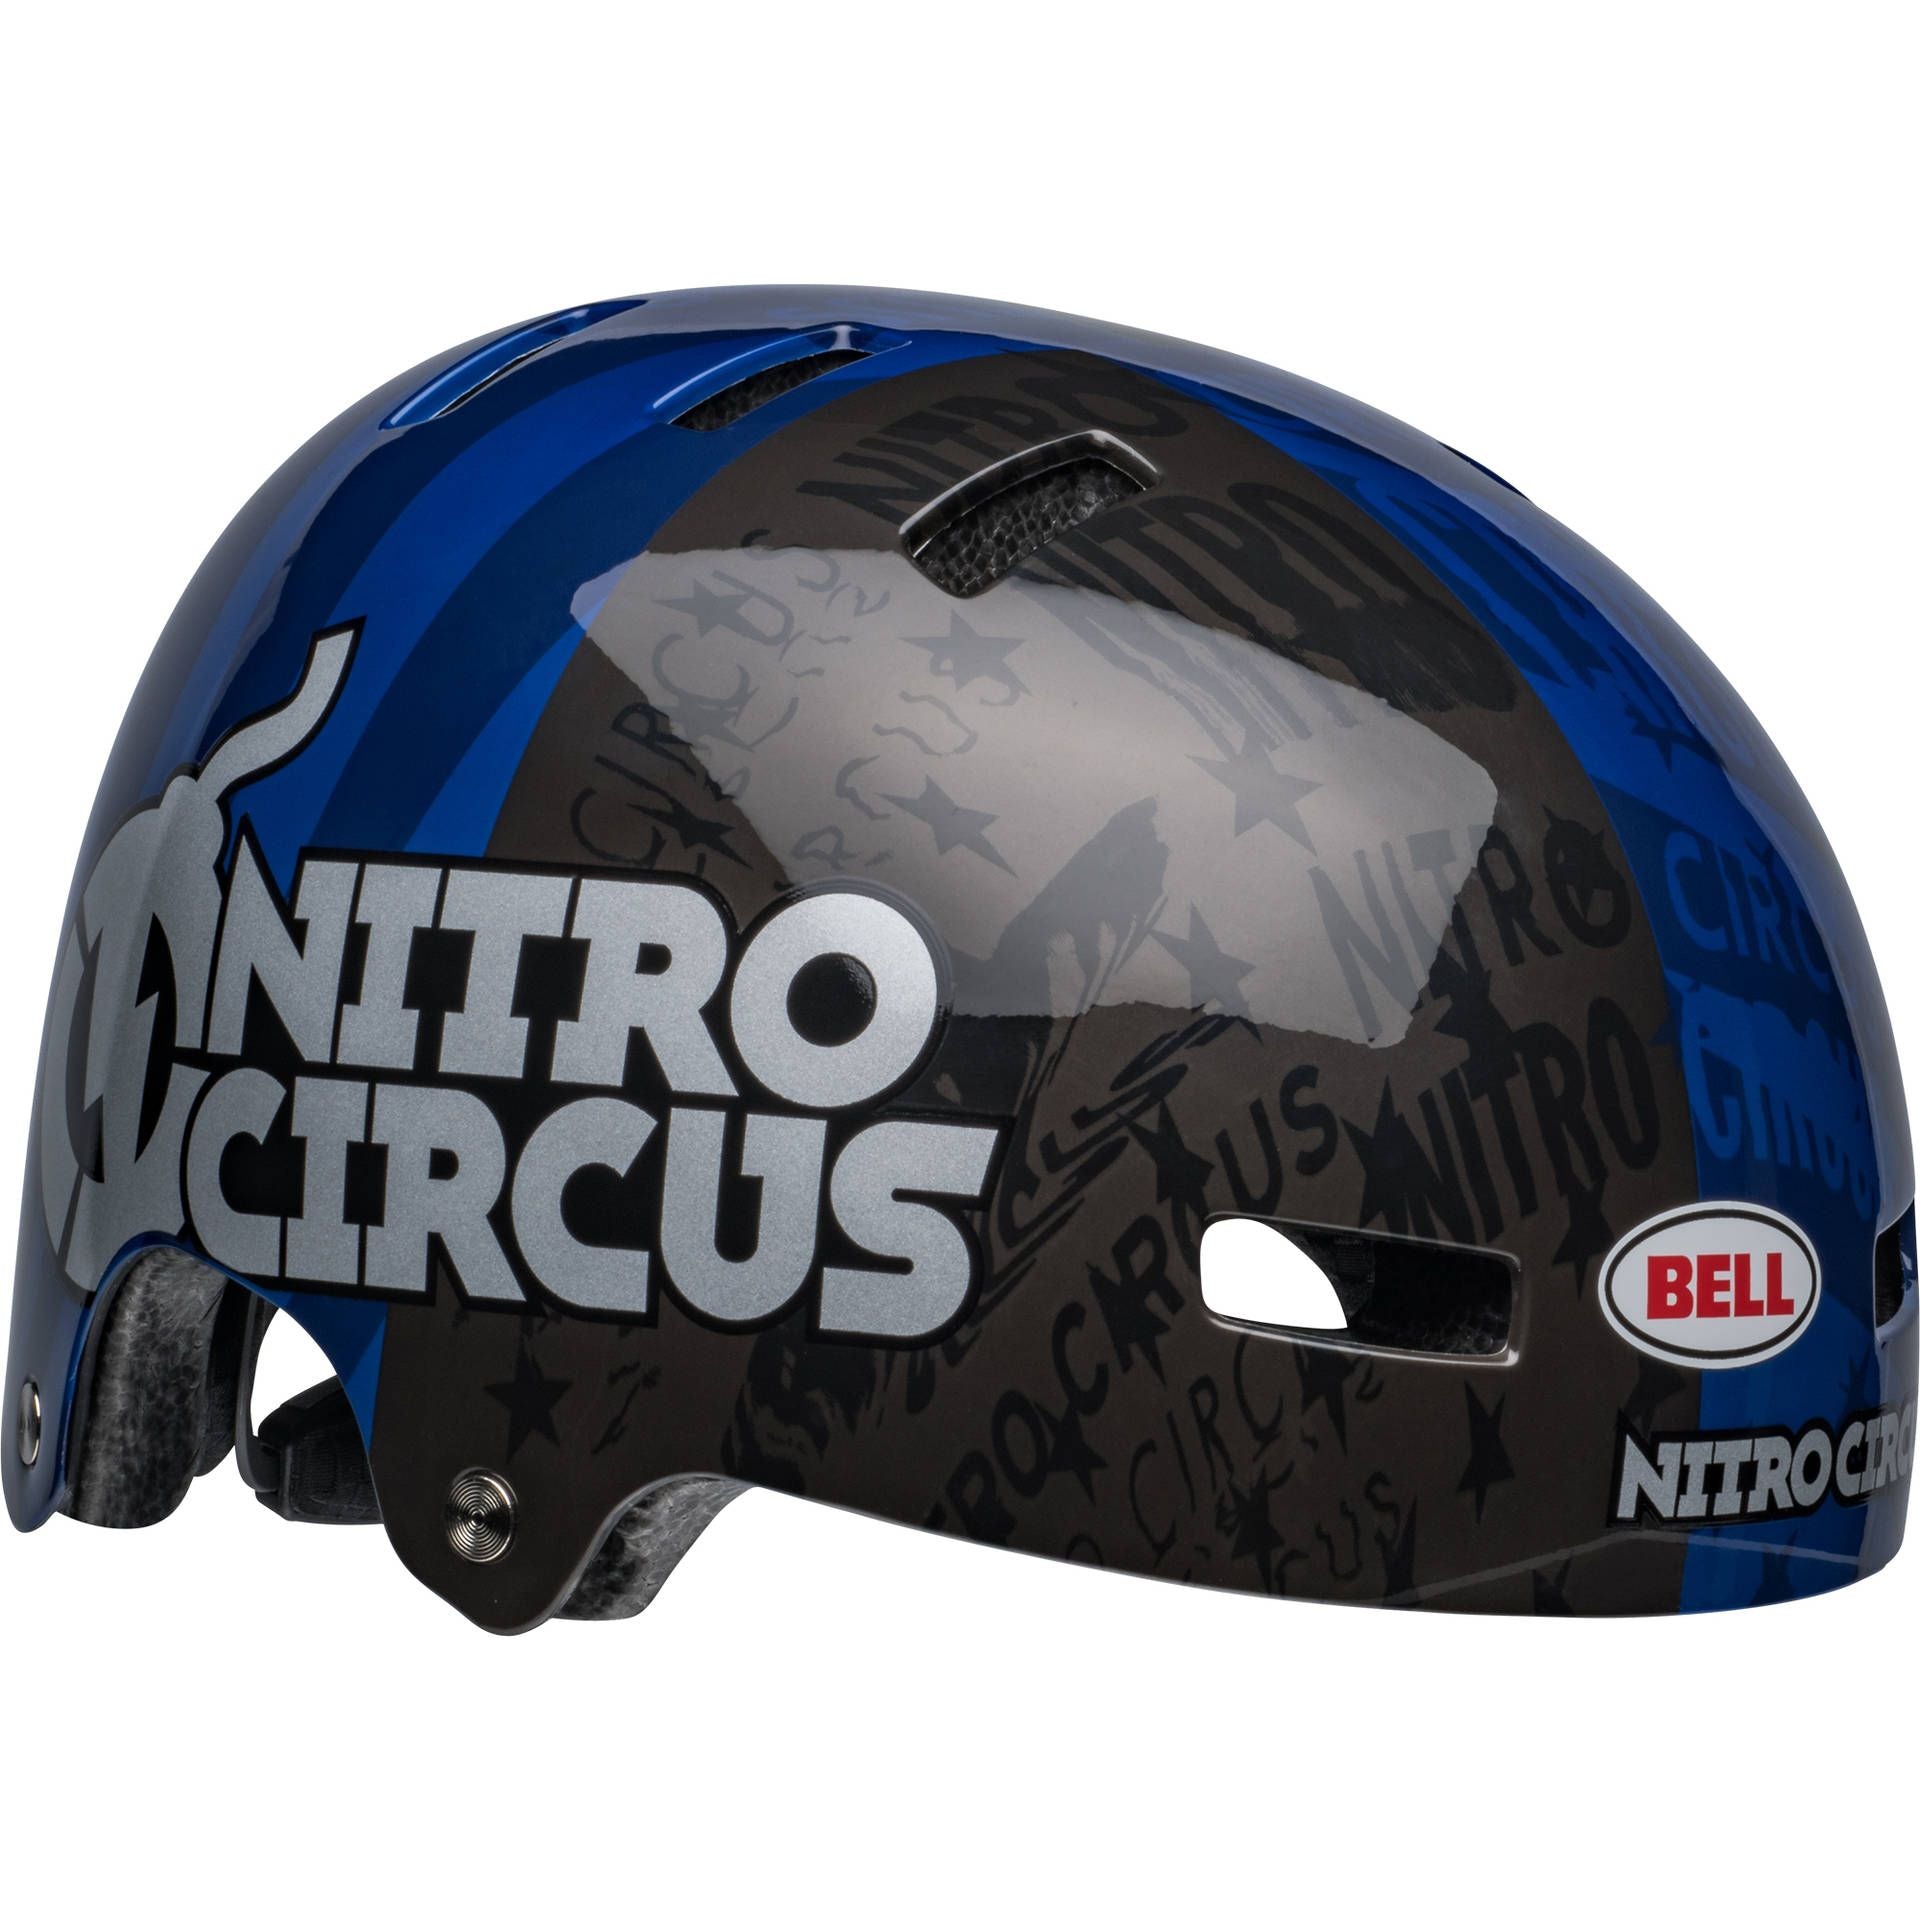 Bell Nitro Circus Local Helmet Size Medium (LIMITED EDITION 